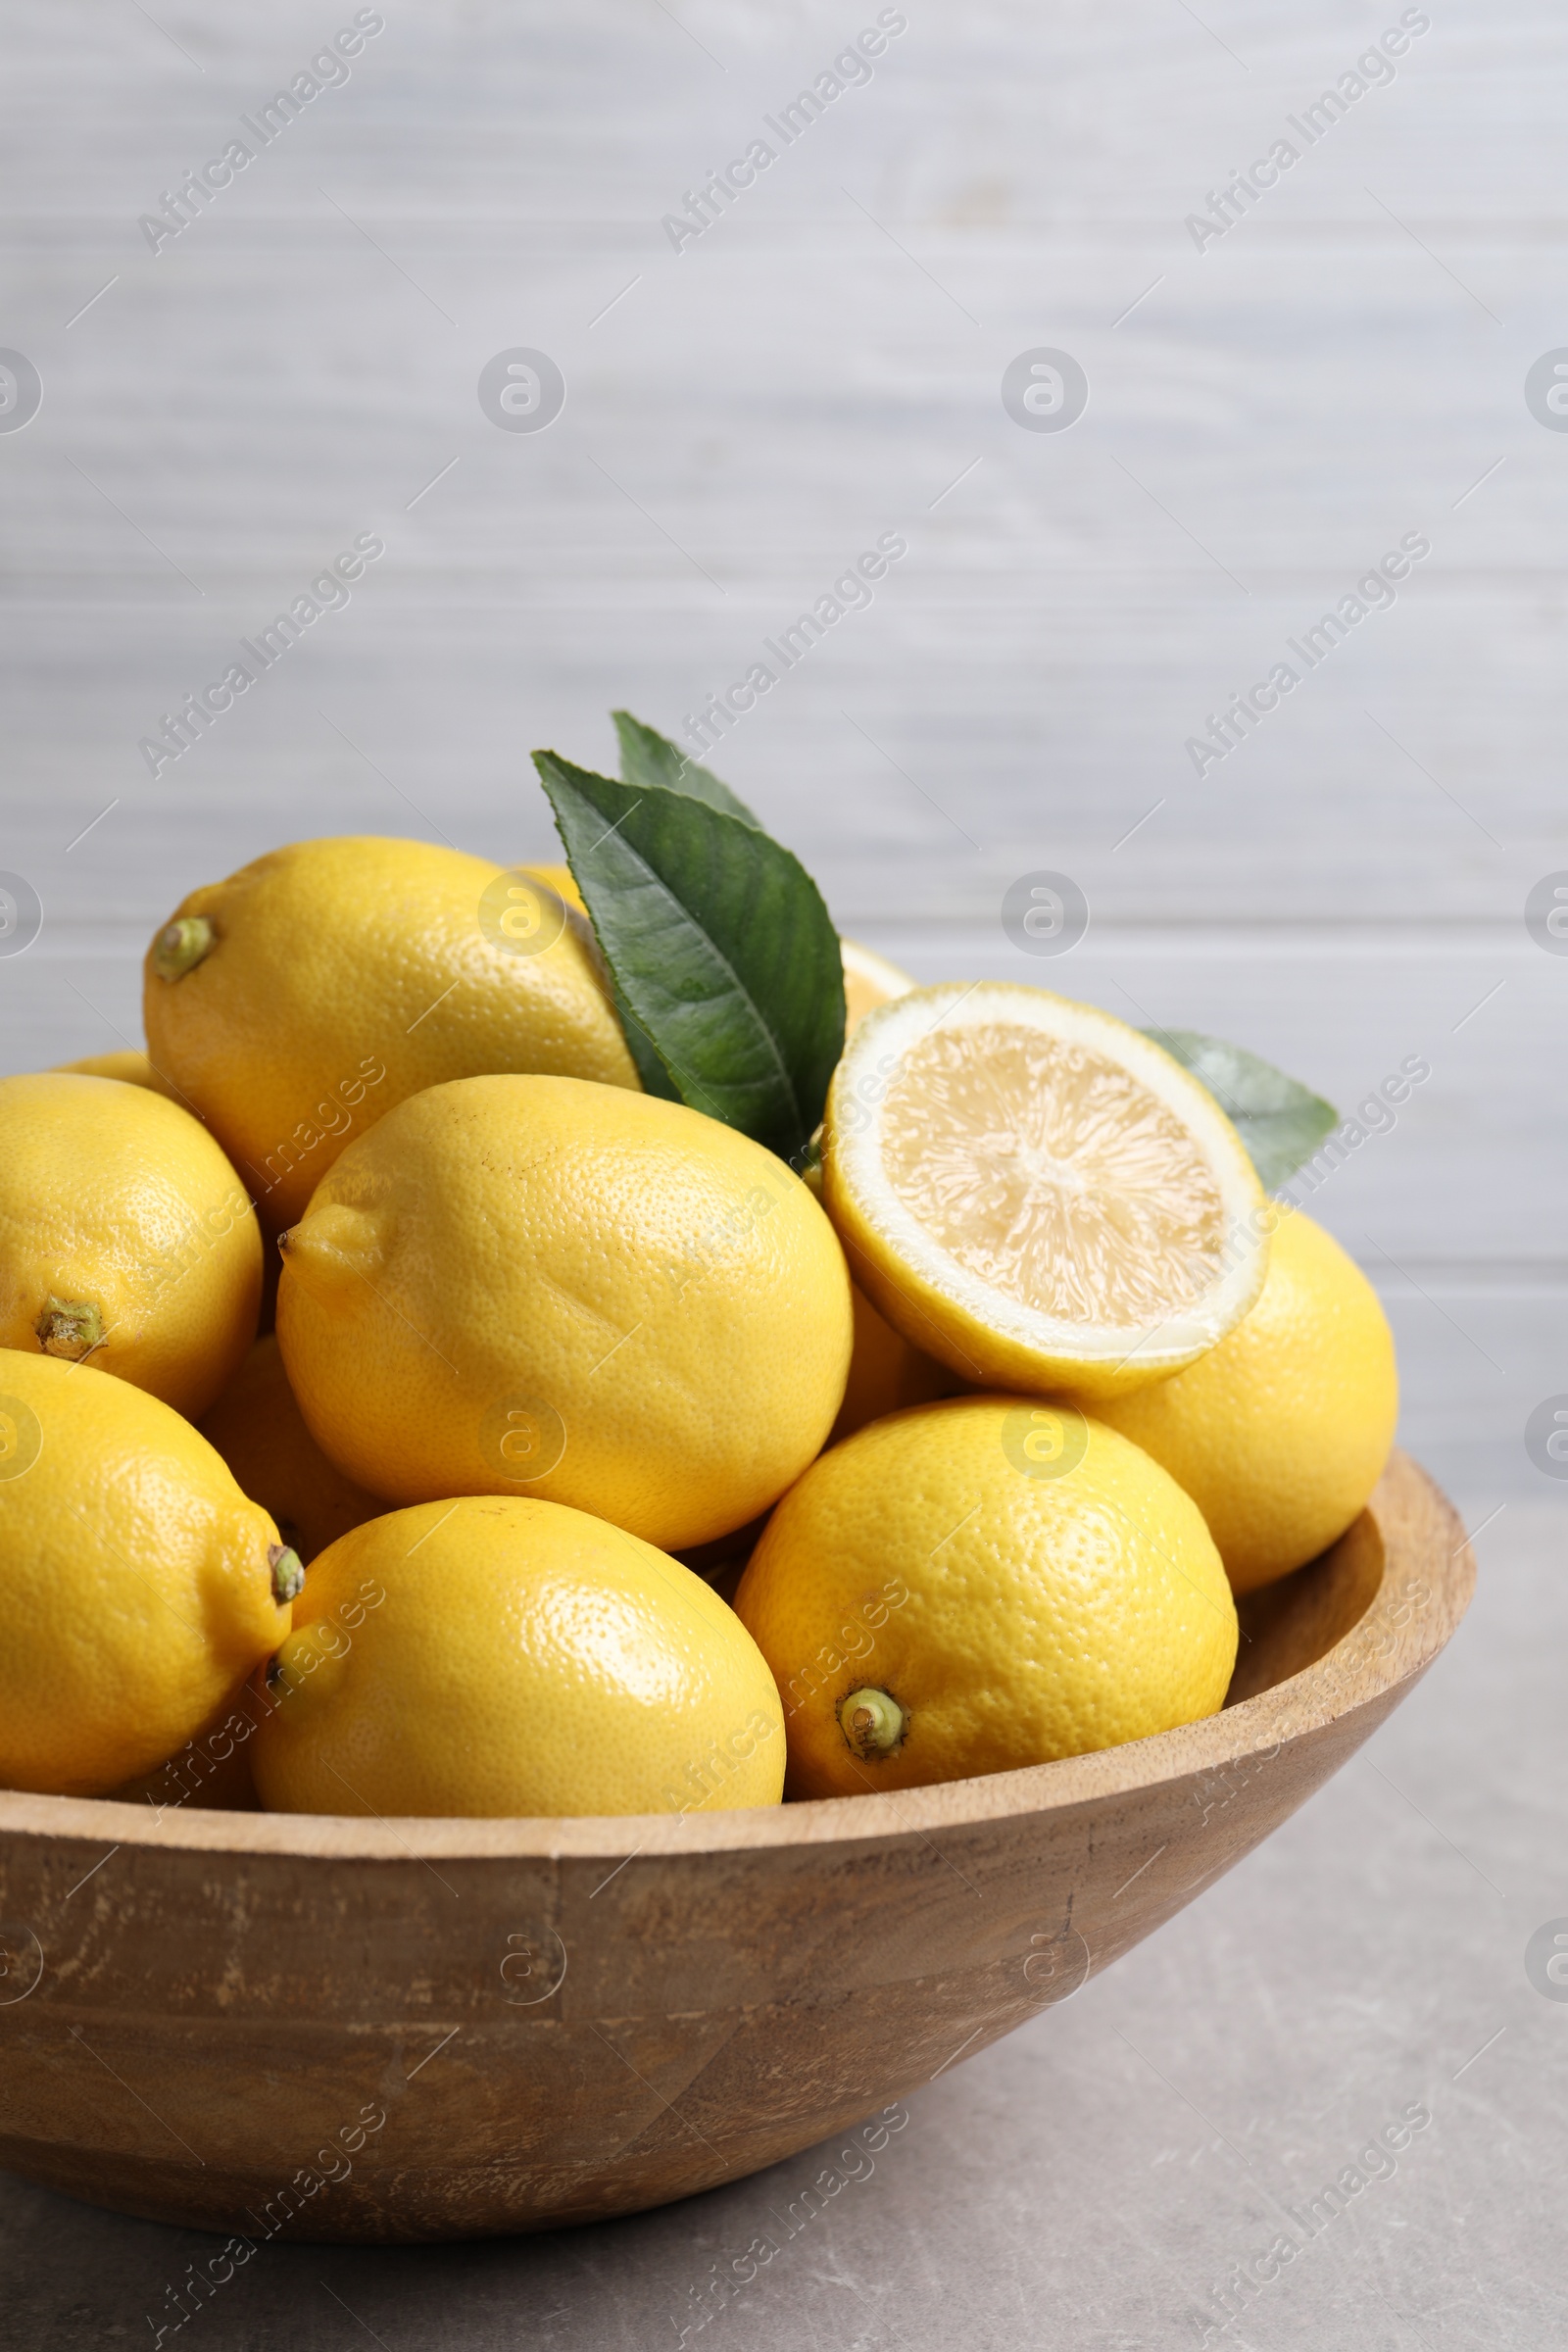 Photo of Many fresh ripe lemons on light grey table